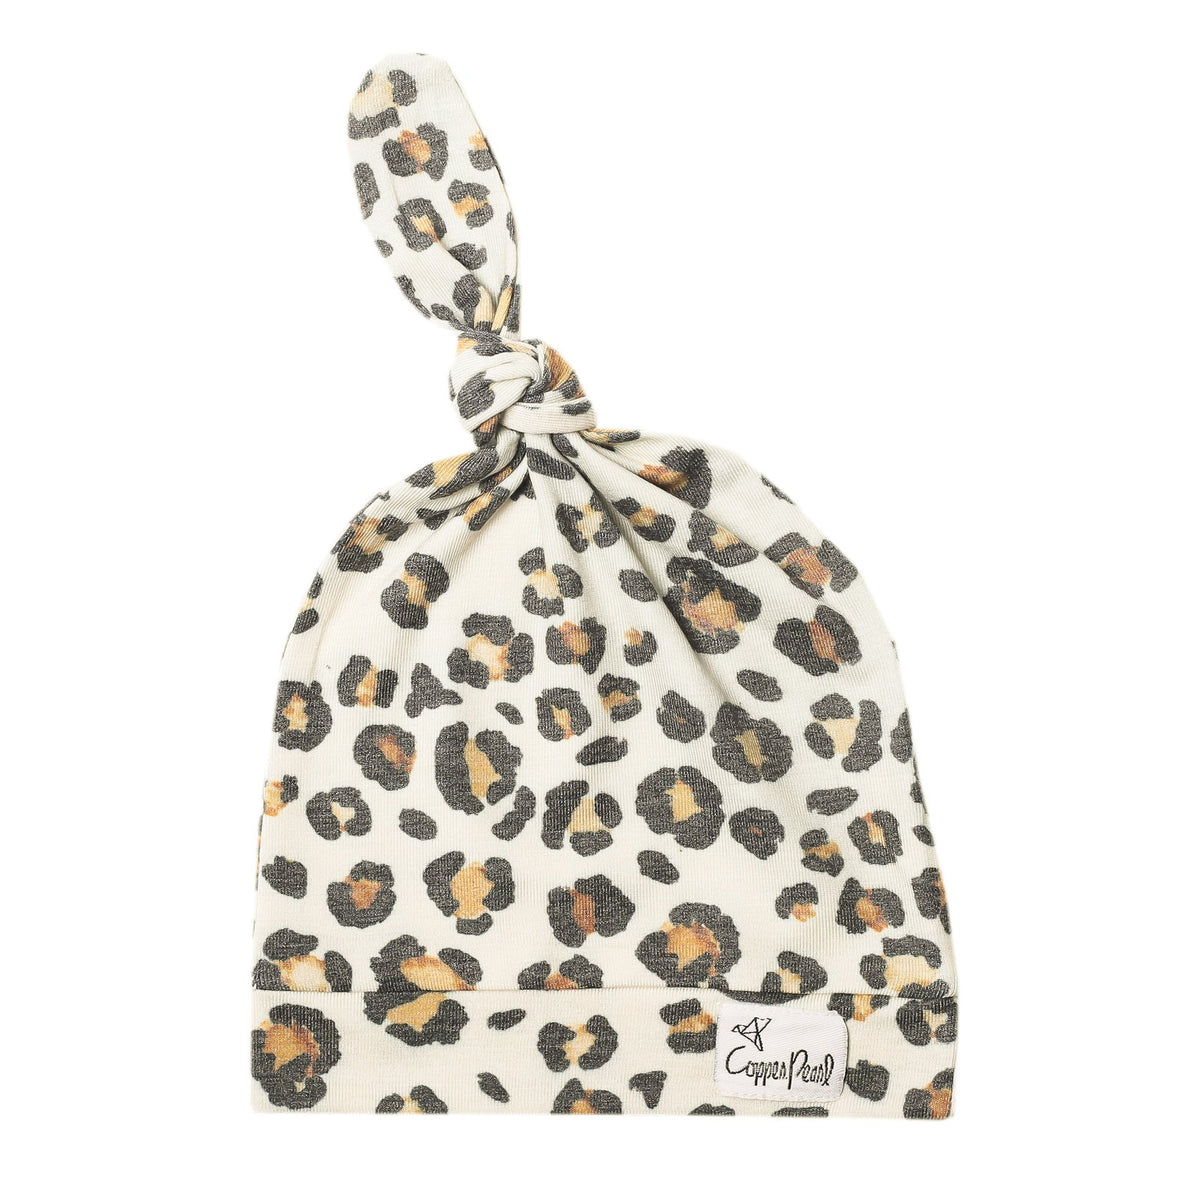 Zara Cheetah Top Knot Hat